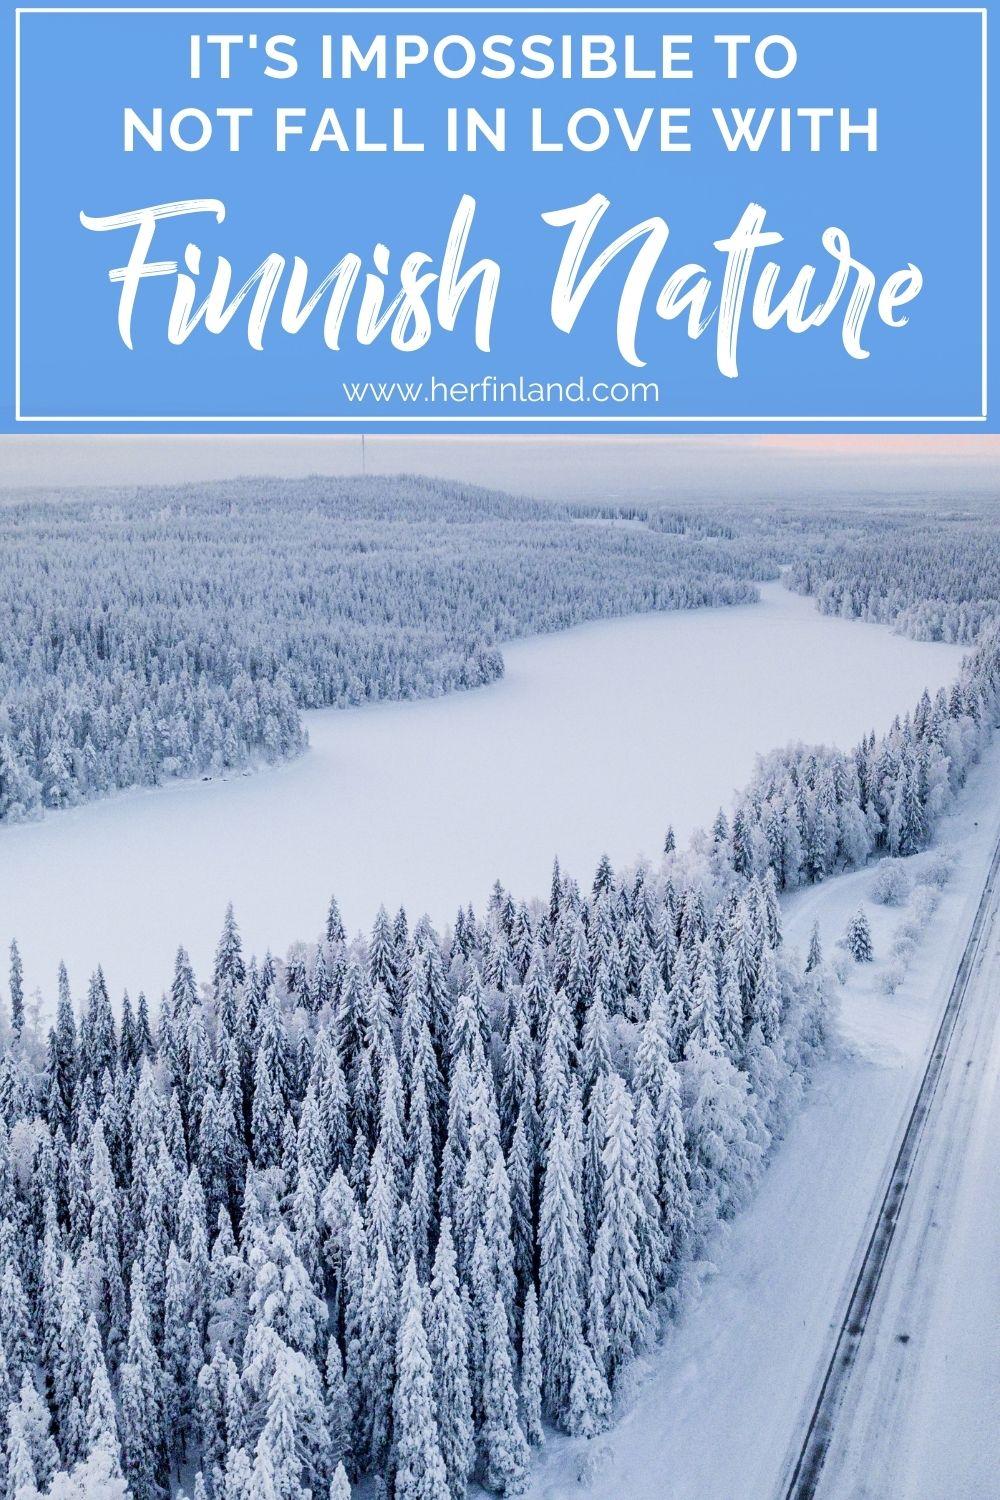 finland winter nature